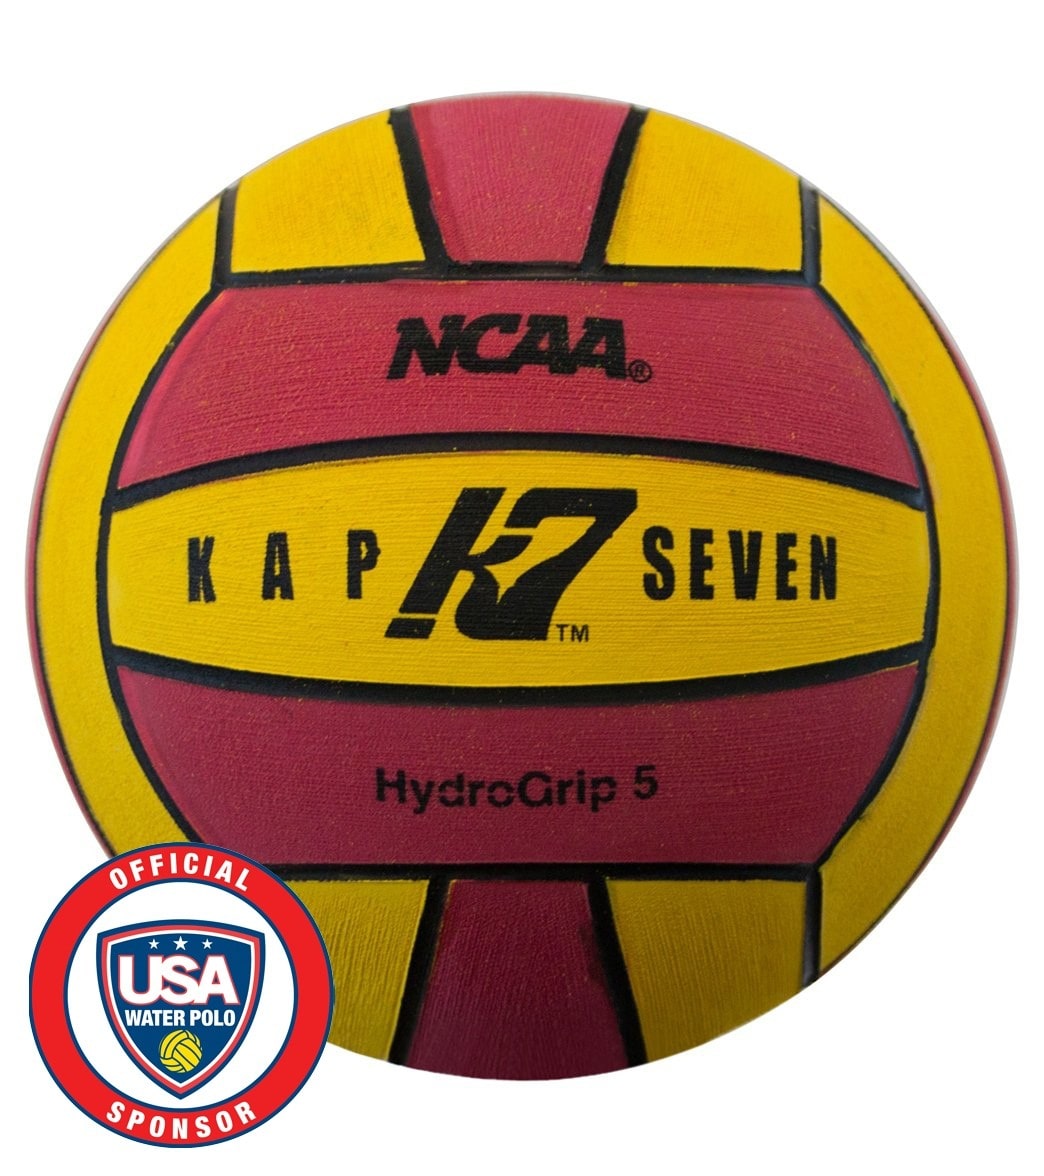 Kap7 Men's Size 5 Hydrogrip Water Polo Ball Ncaa Cwpa - Yellow/Red - Swimoutlet.com